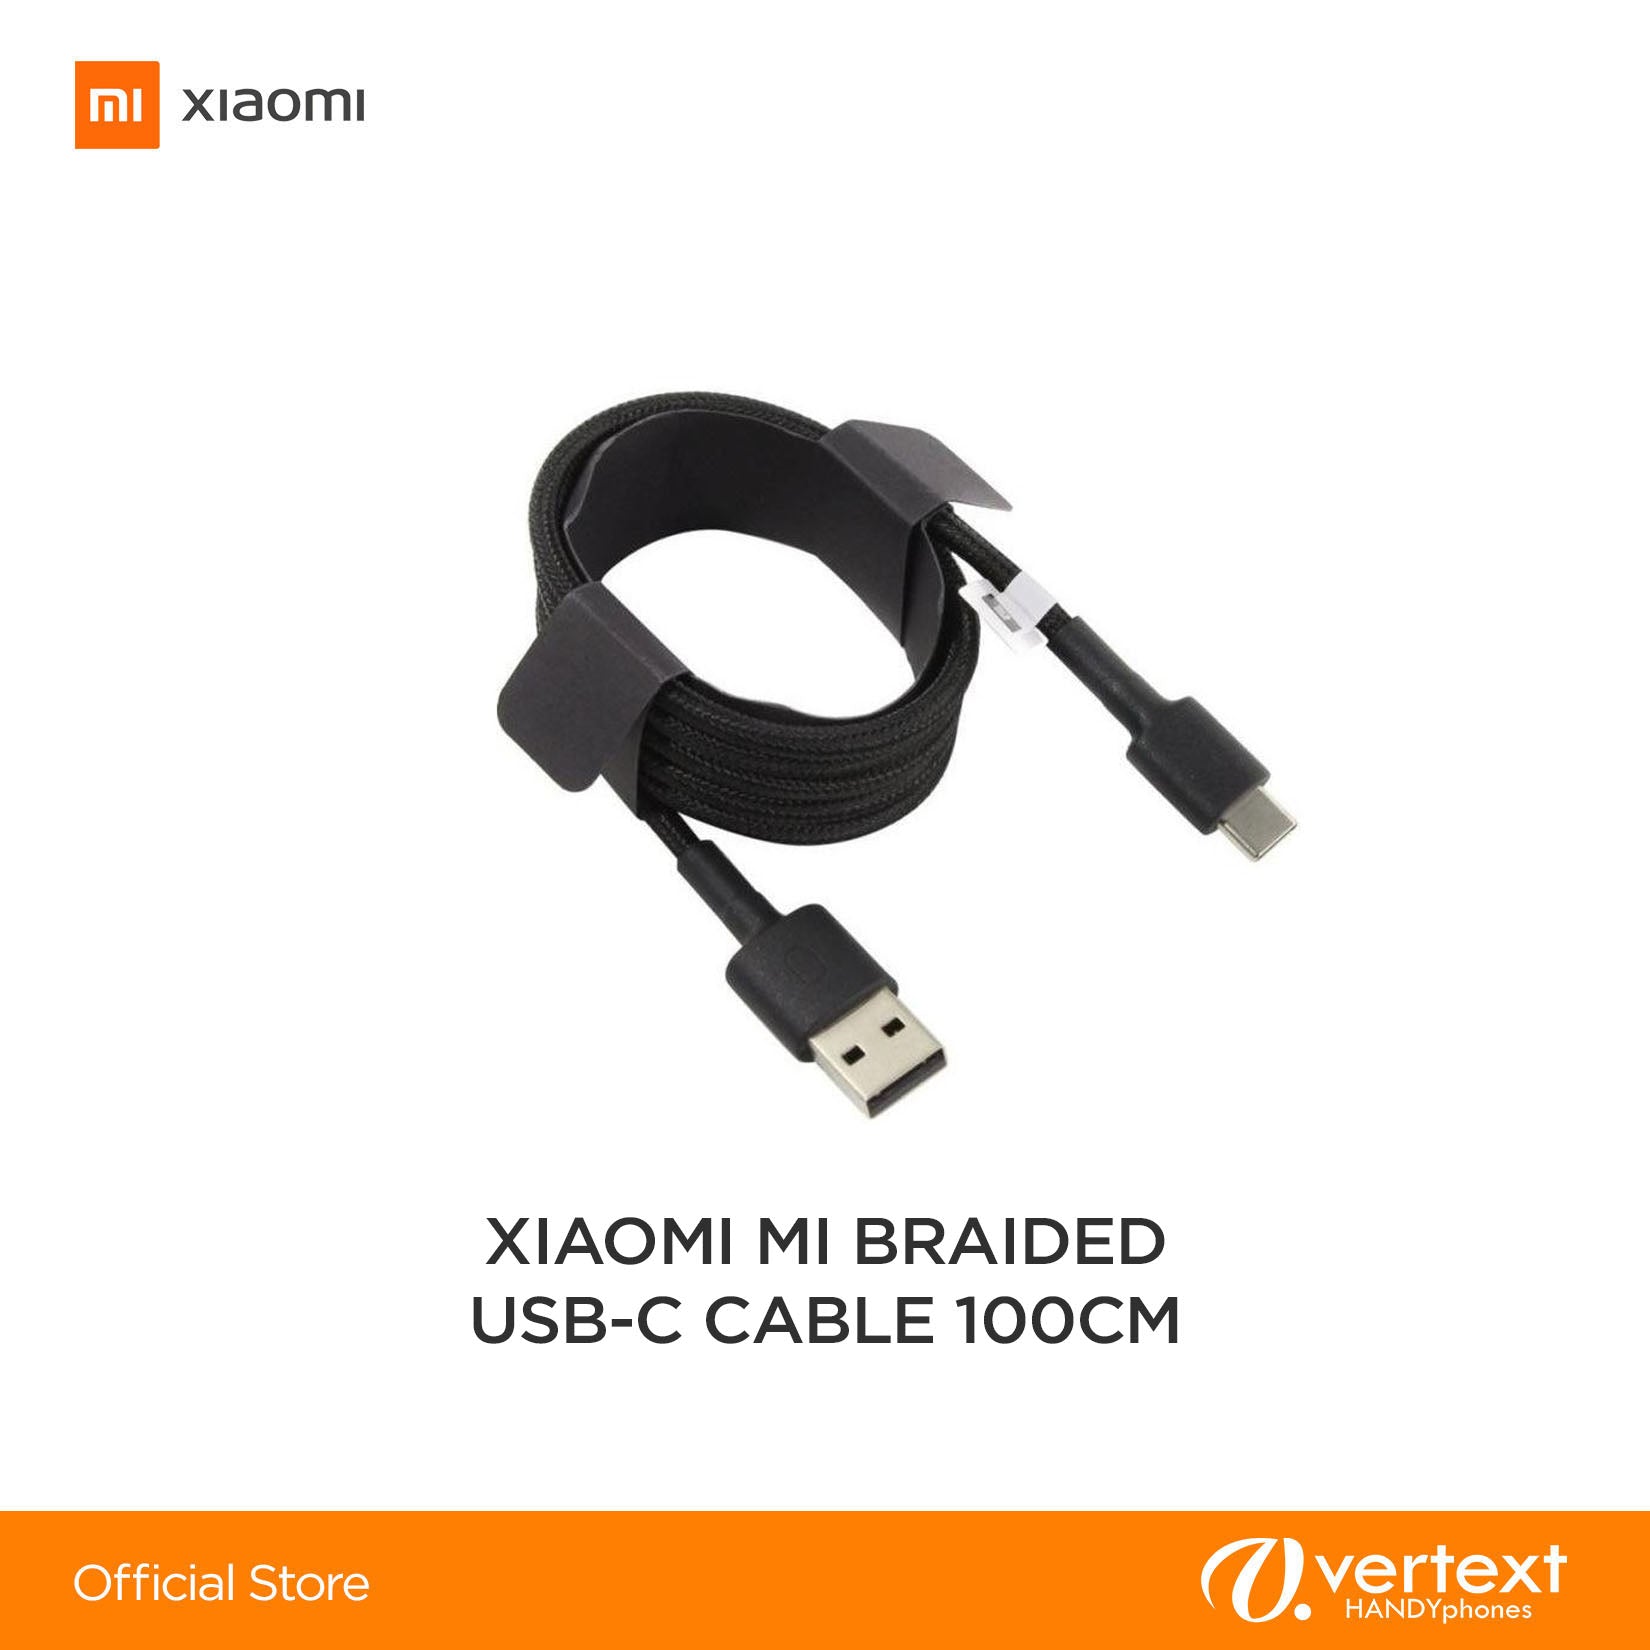 Xiaomi MI BRAIDED USB TYPE C CABLE